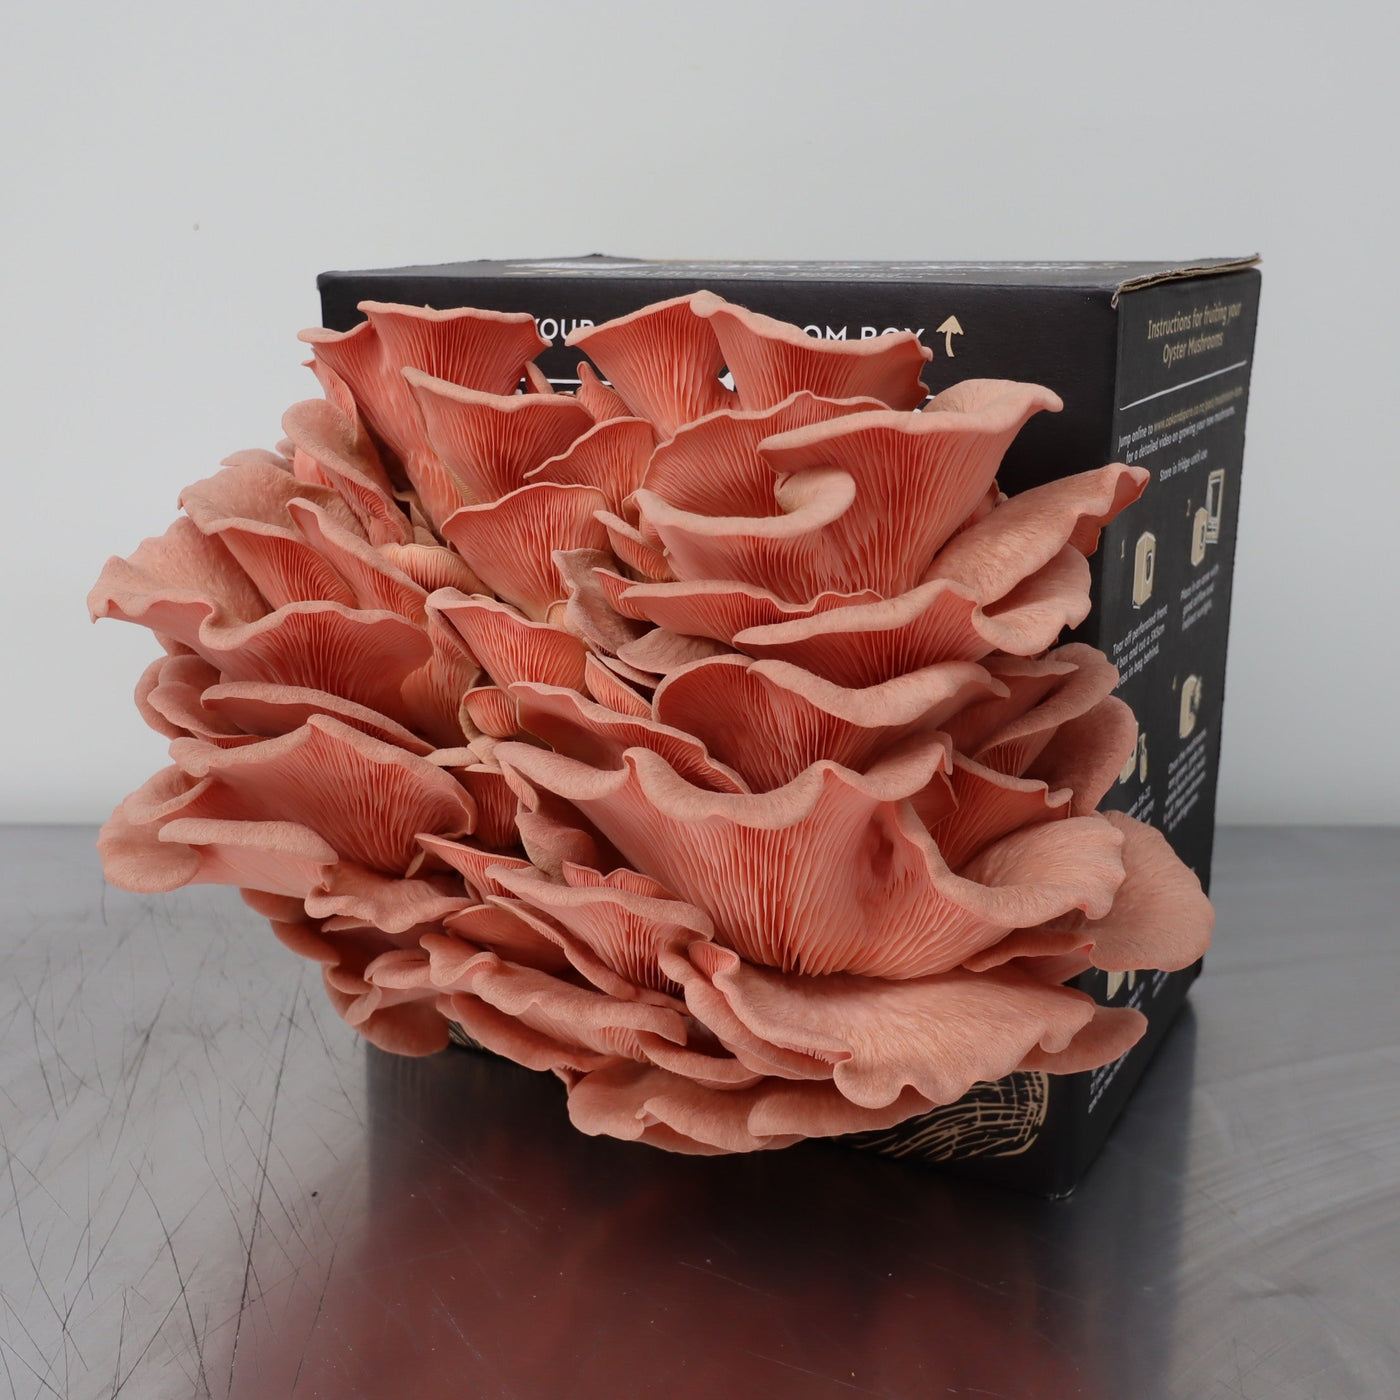 Pink Oyster Mushroom Kit